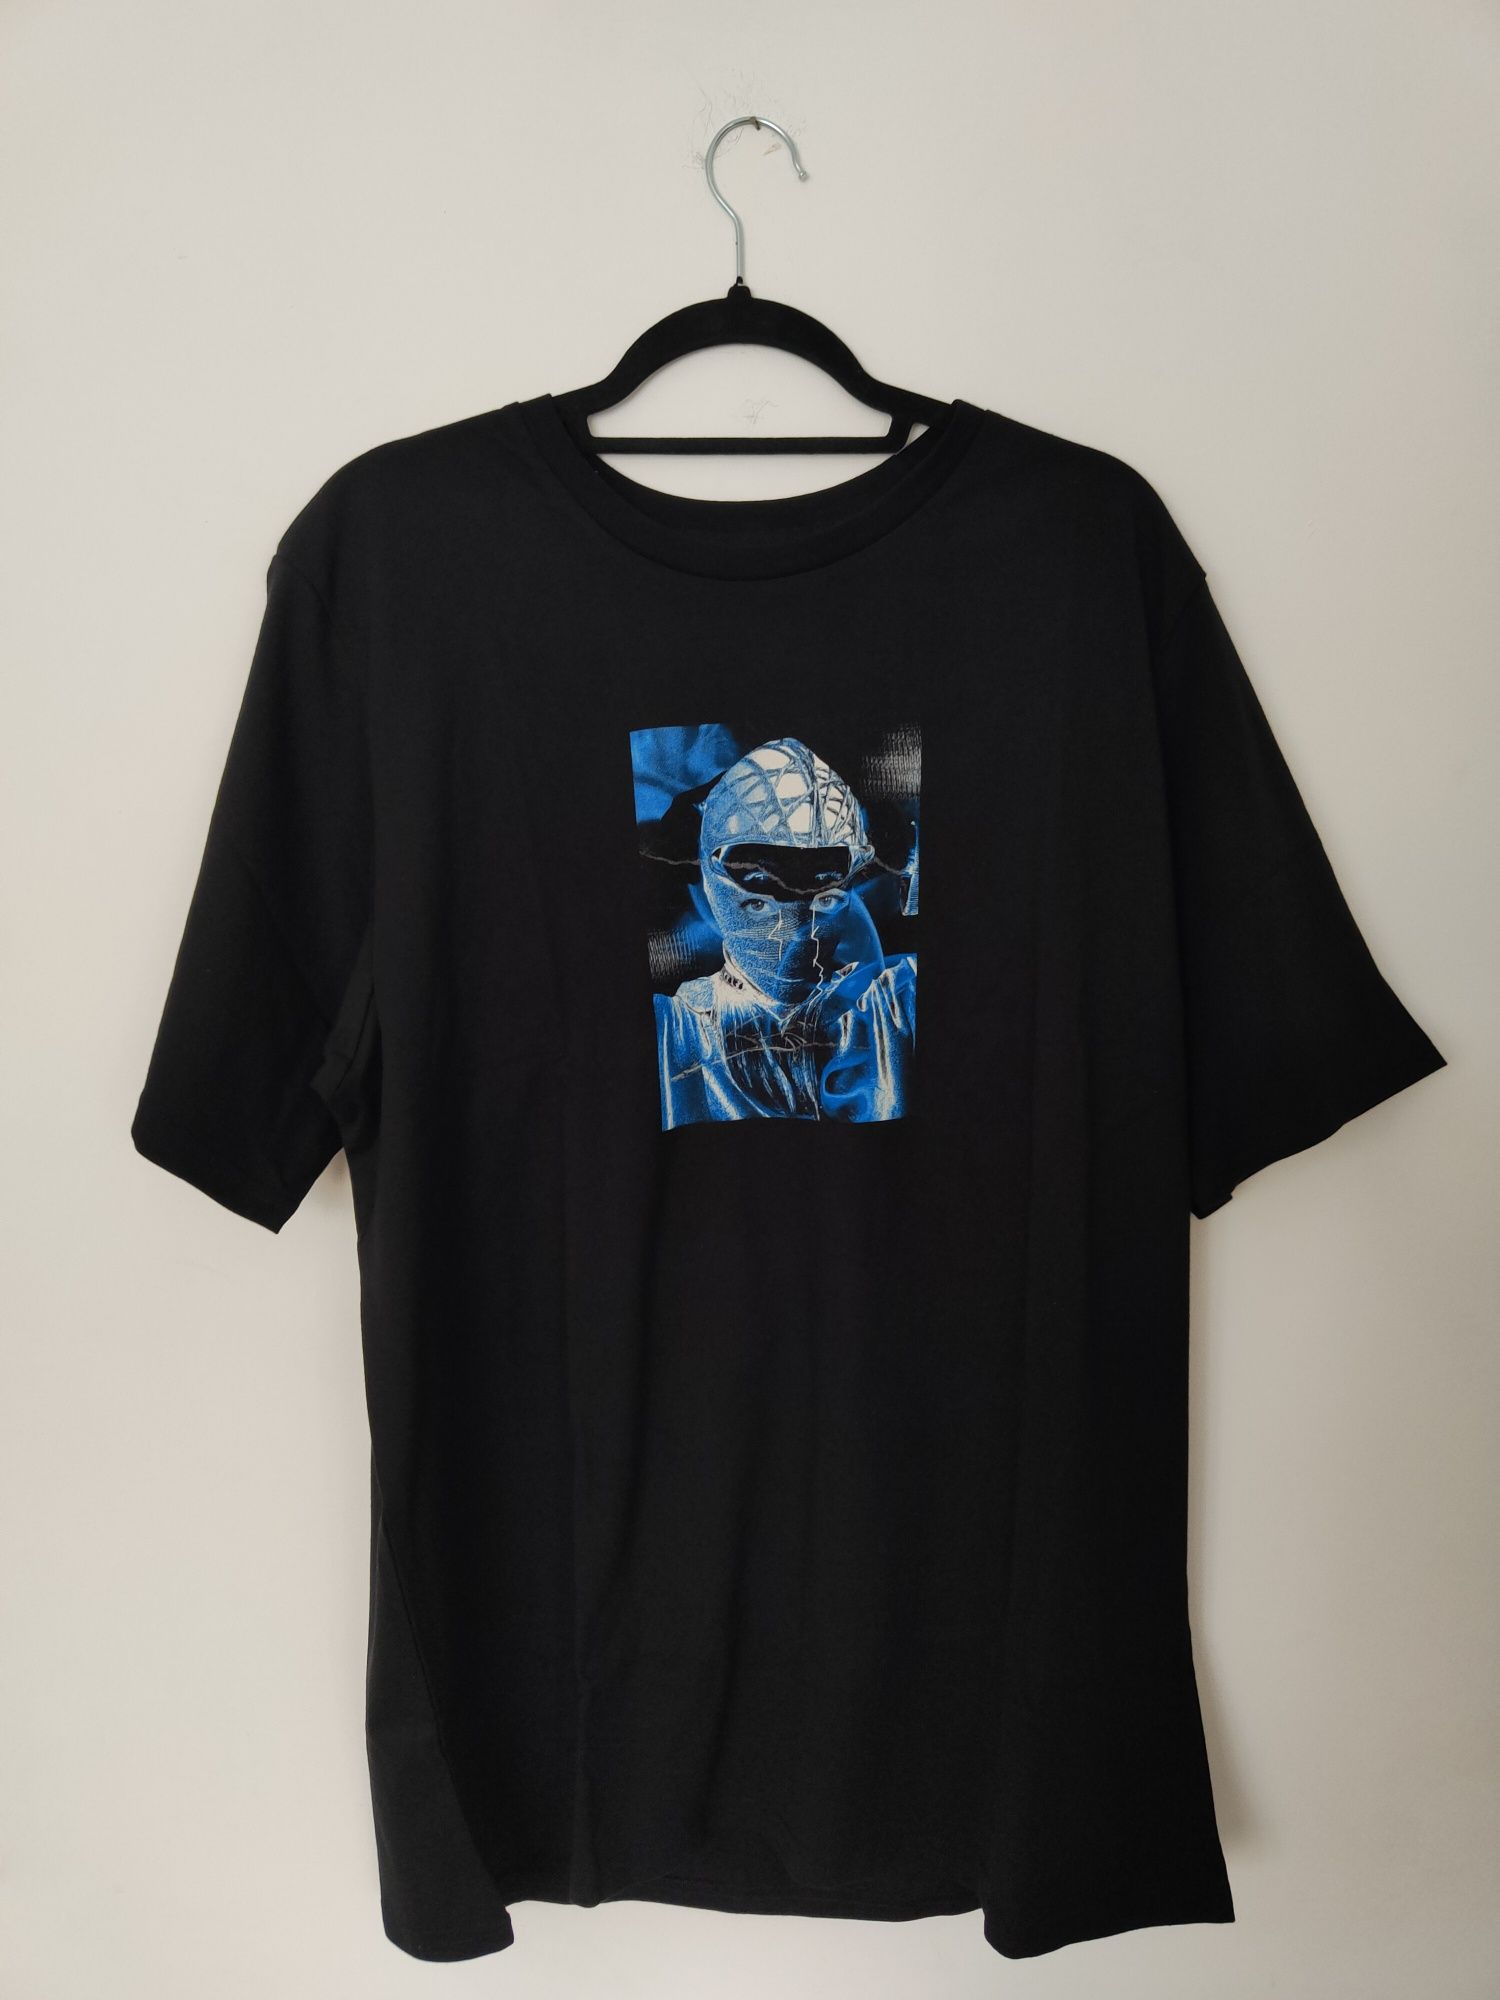 Mata - CBW 33 koszulka SBM T-shirt Blue Topaz Młody Matczak fumar mata